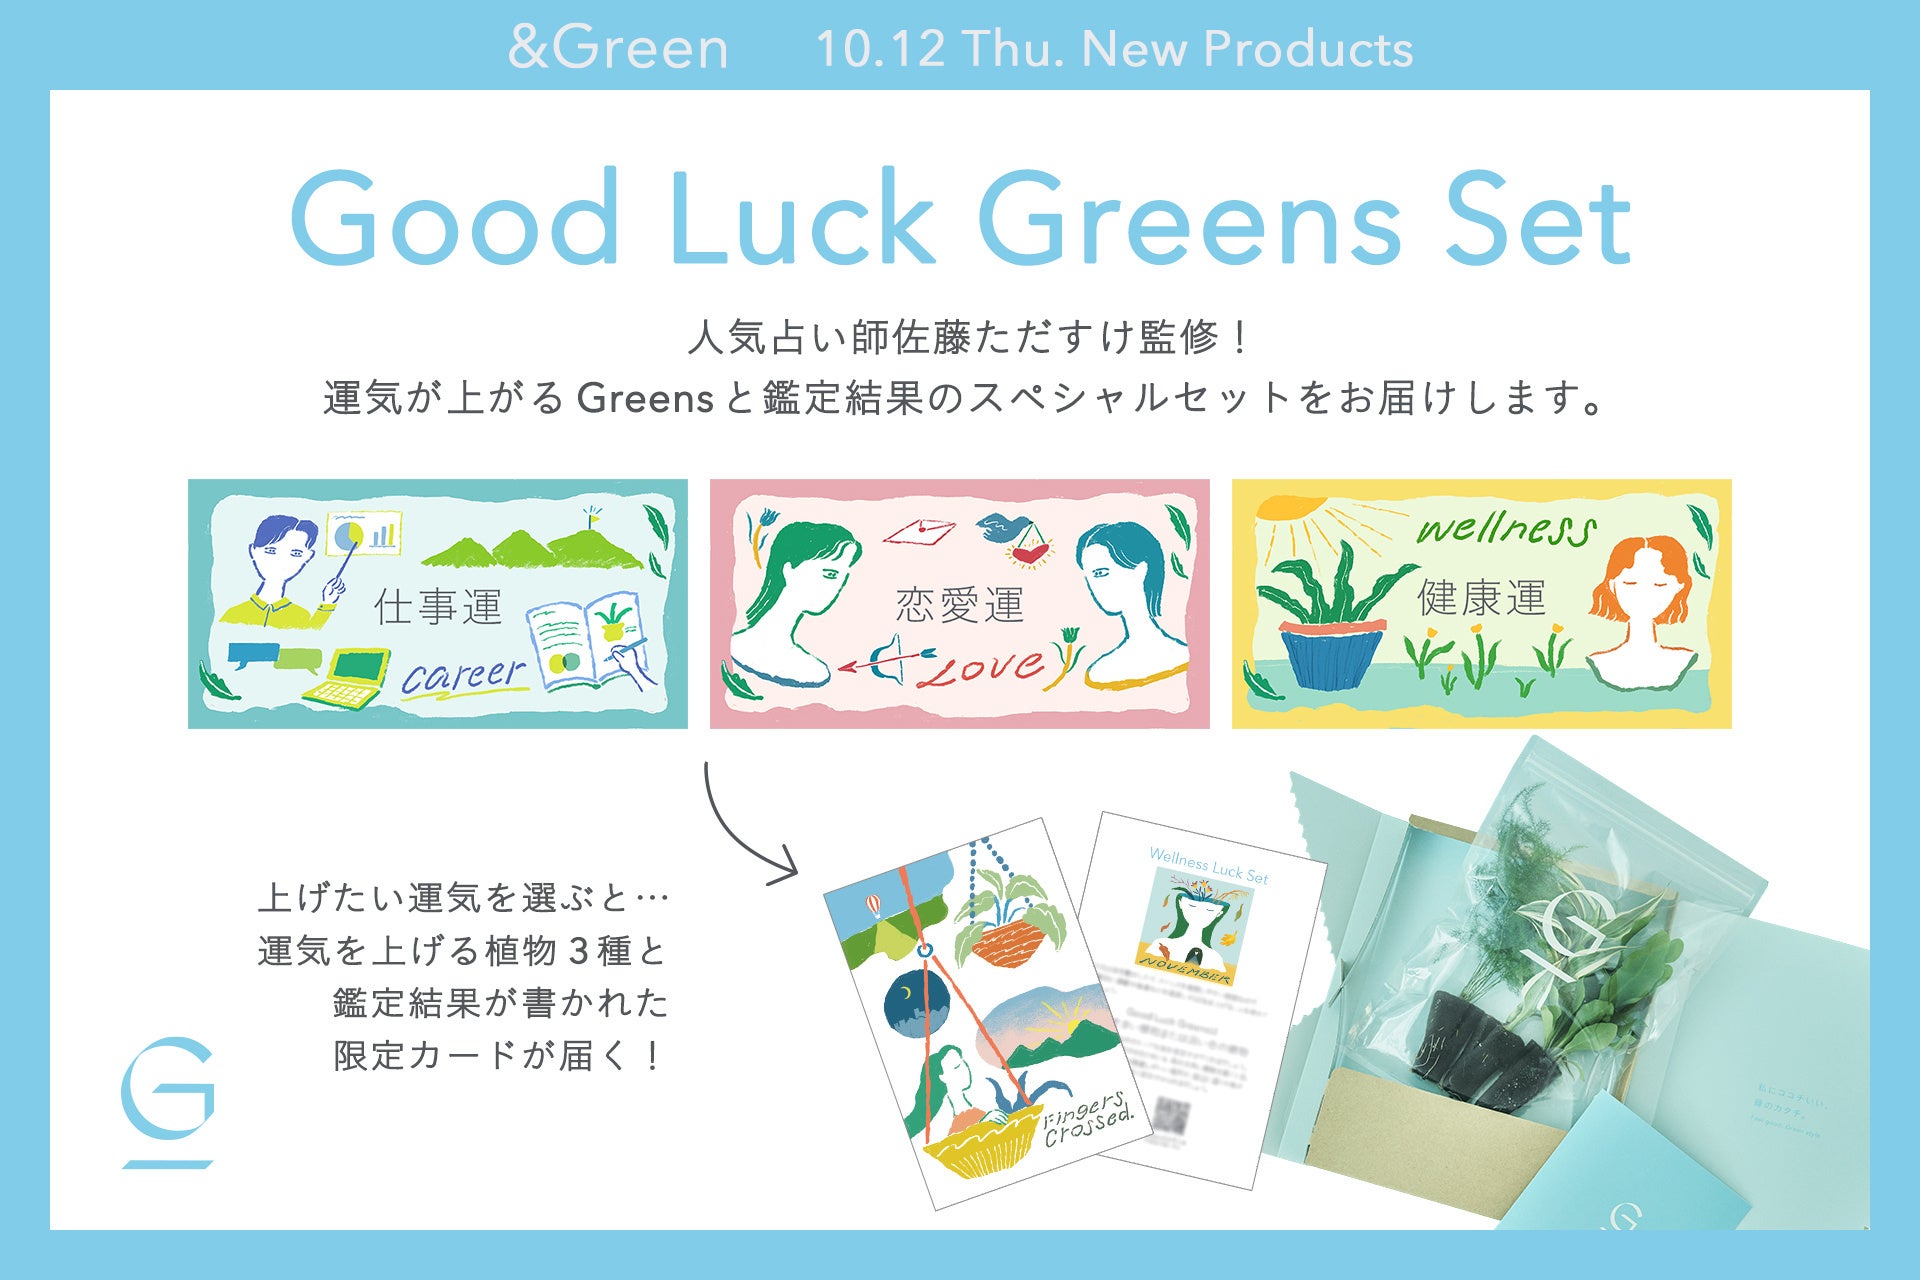 yg킸ňĂϗtAuGreenv^CオϗtAbZ[WJ[h͂ViuGood Luck Greens Setv𔭔